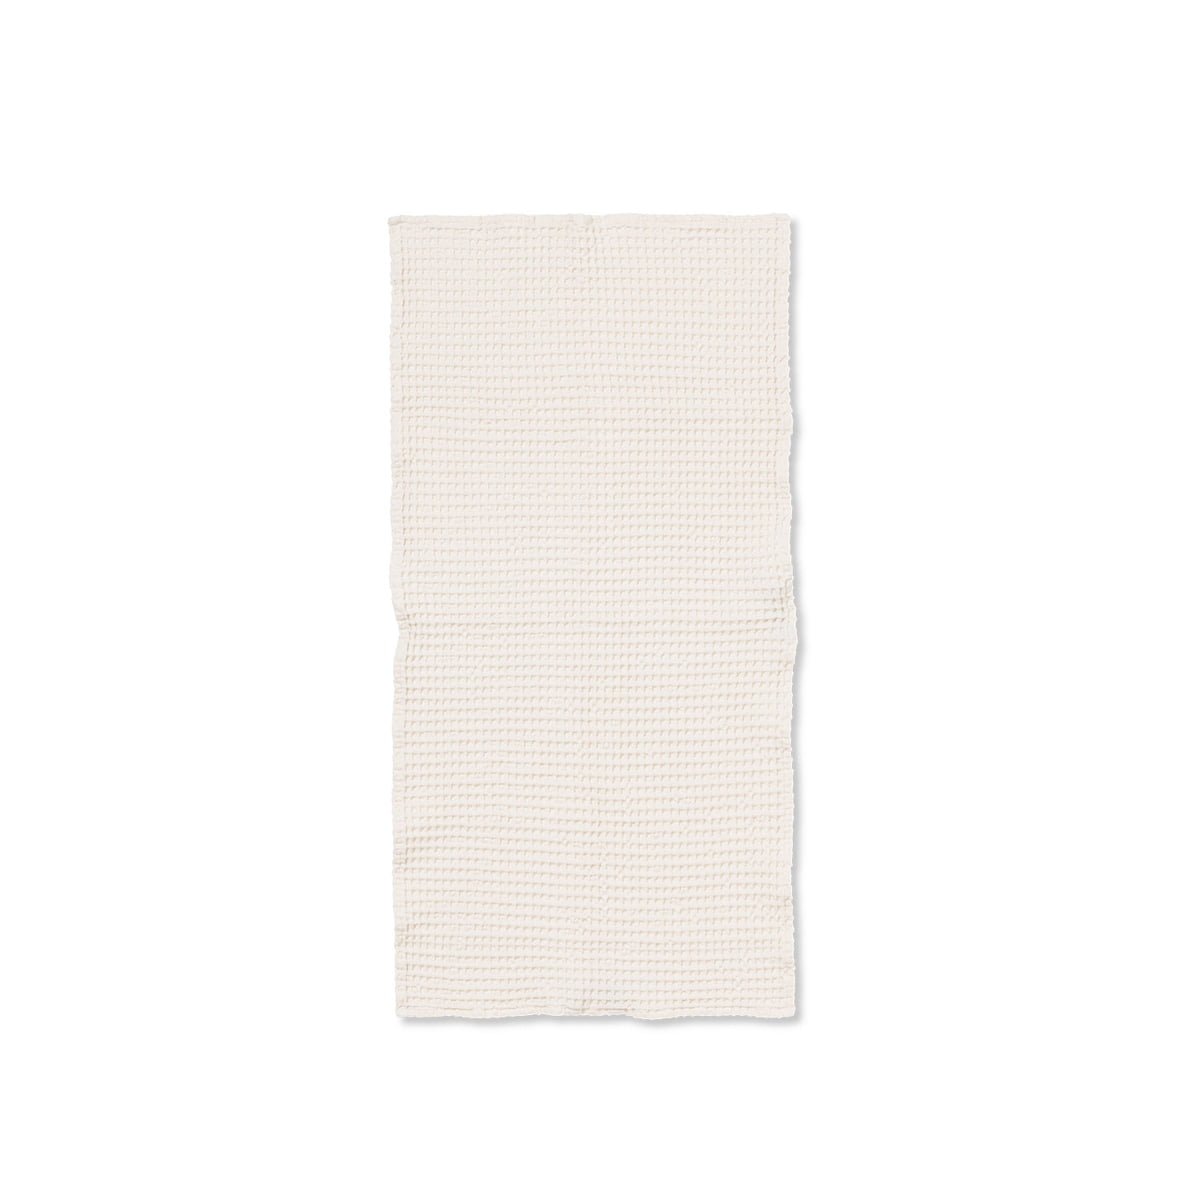 ferm living - organic serviette de bain, 100 x 50 cm, blanc